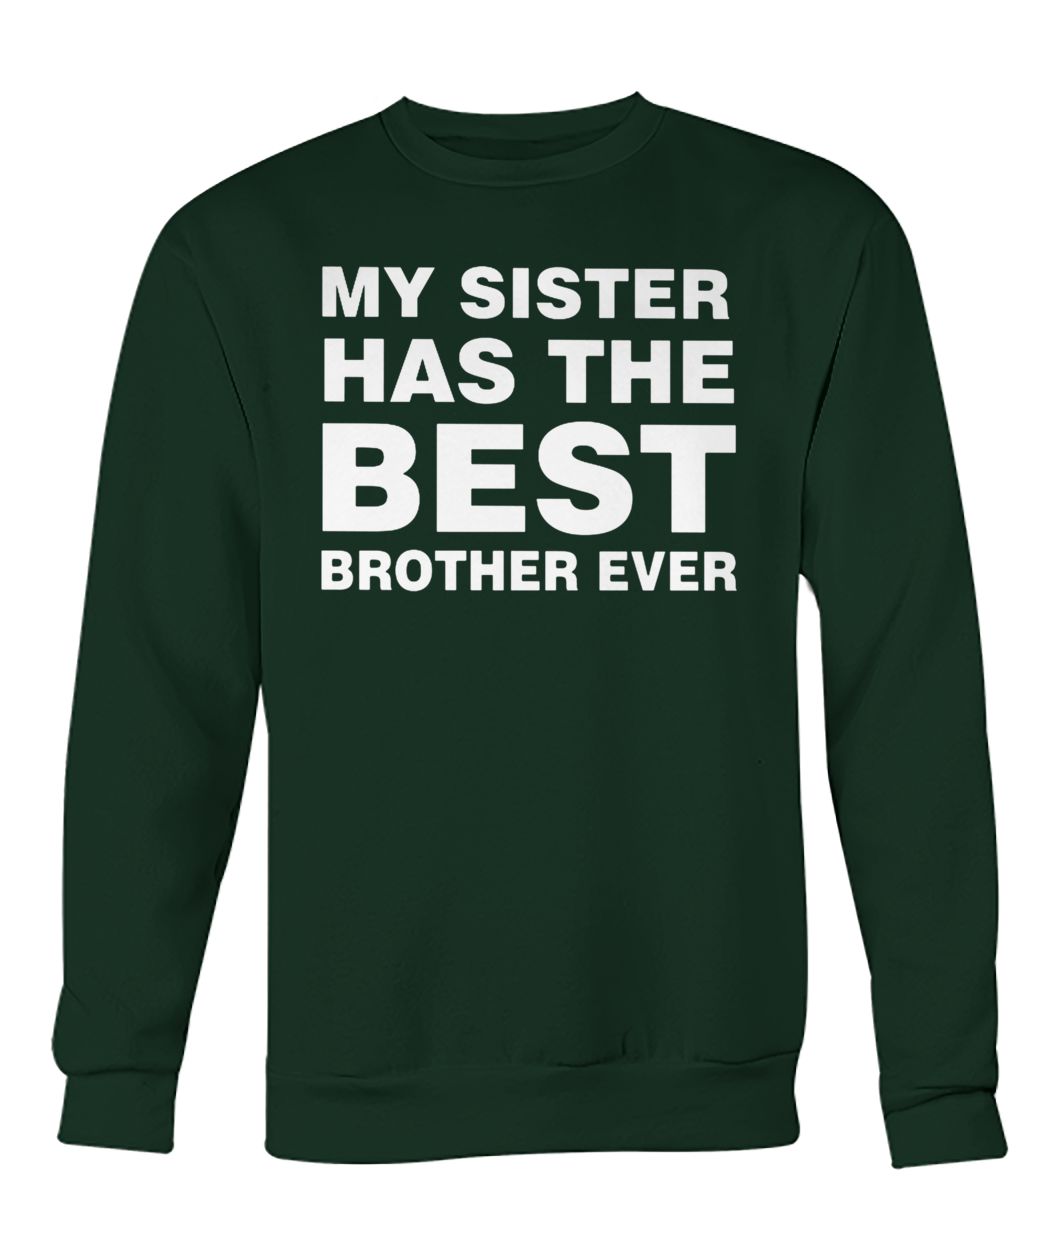 My sister has the best brother ever crew neck sweatshirt